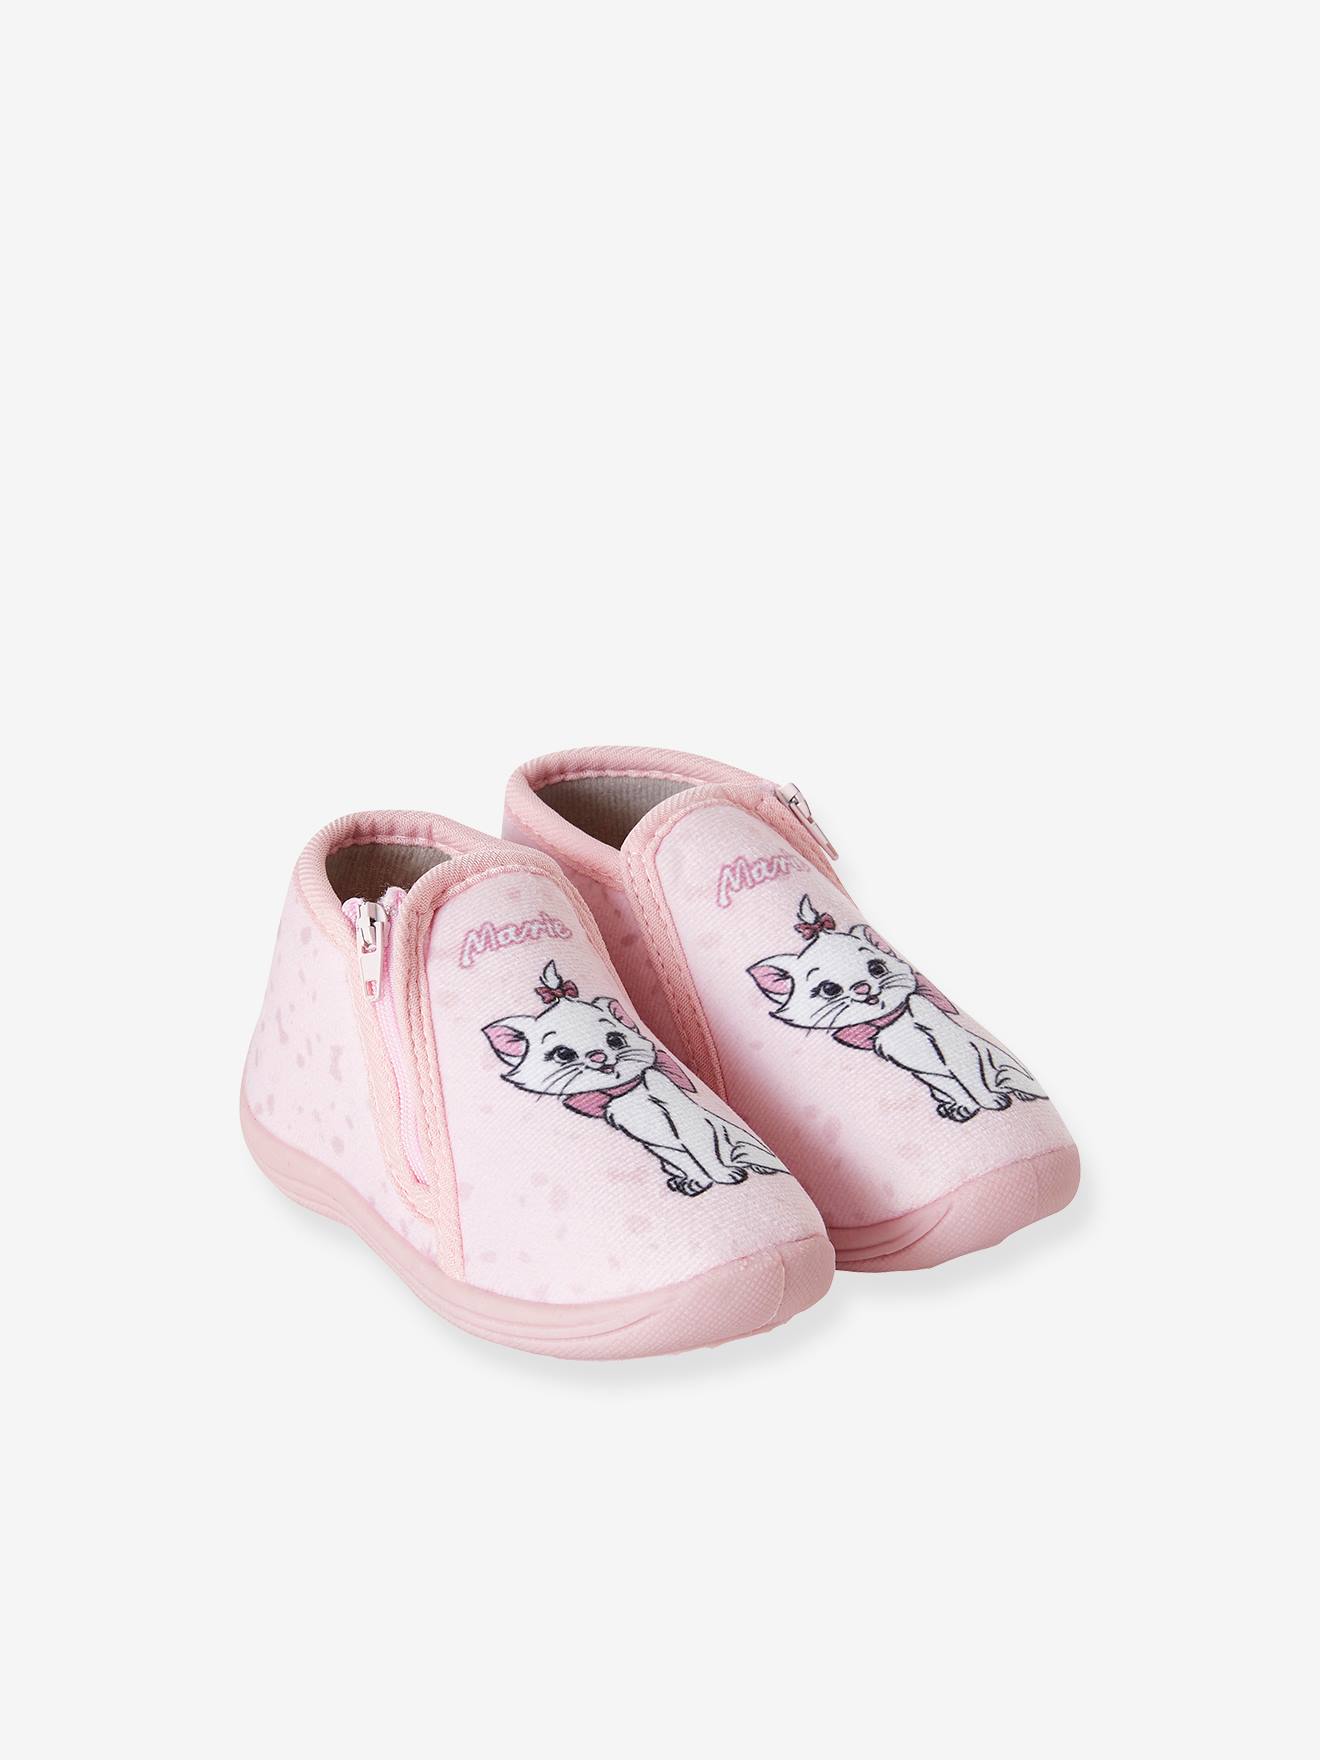 generøsitet syre egoisme Pram Shoes, Disney® The Aristocats' Marie, for Girls - pink light solid  with design, Shoes